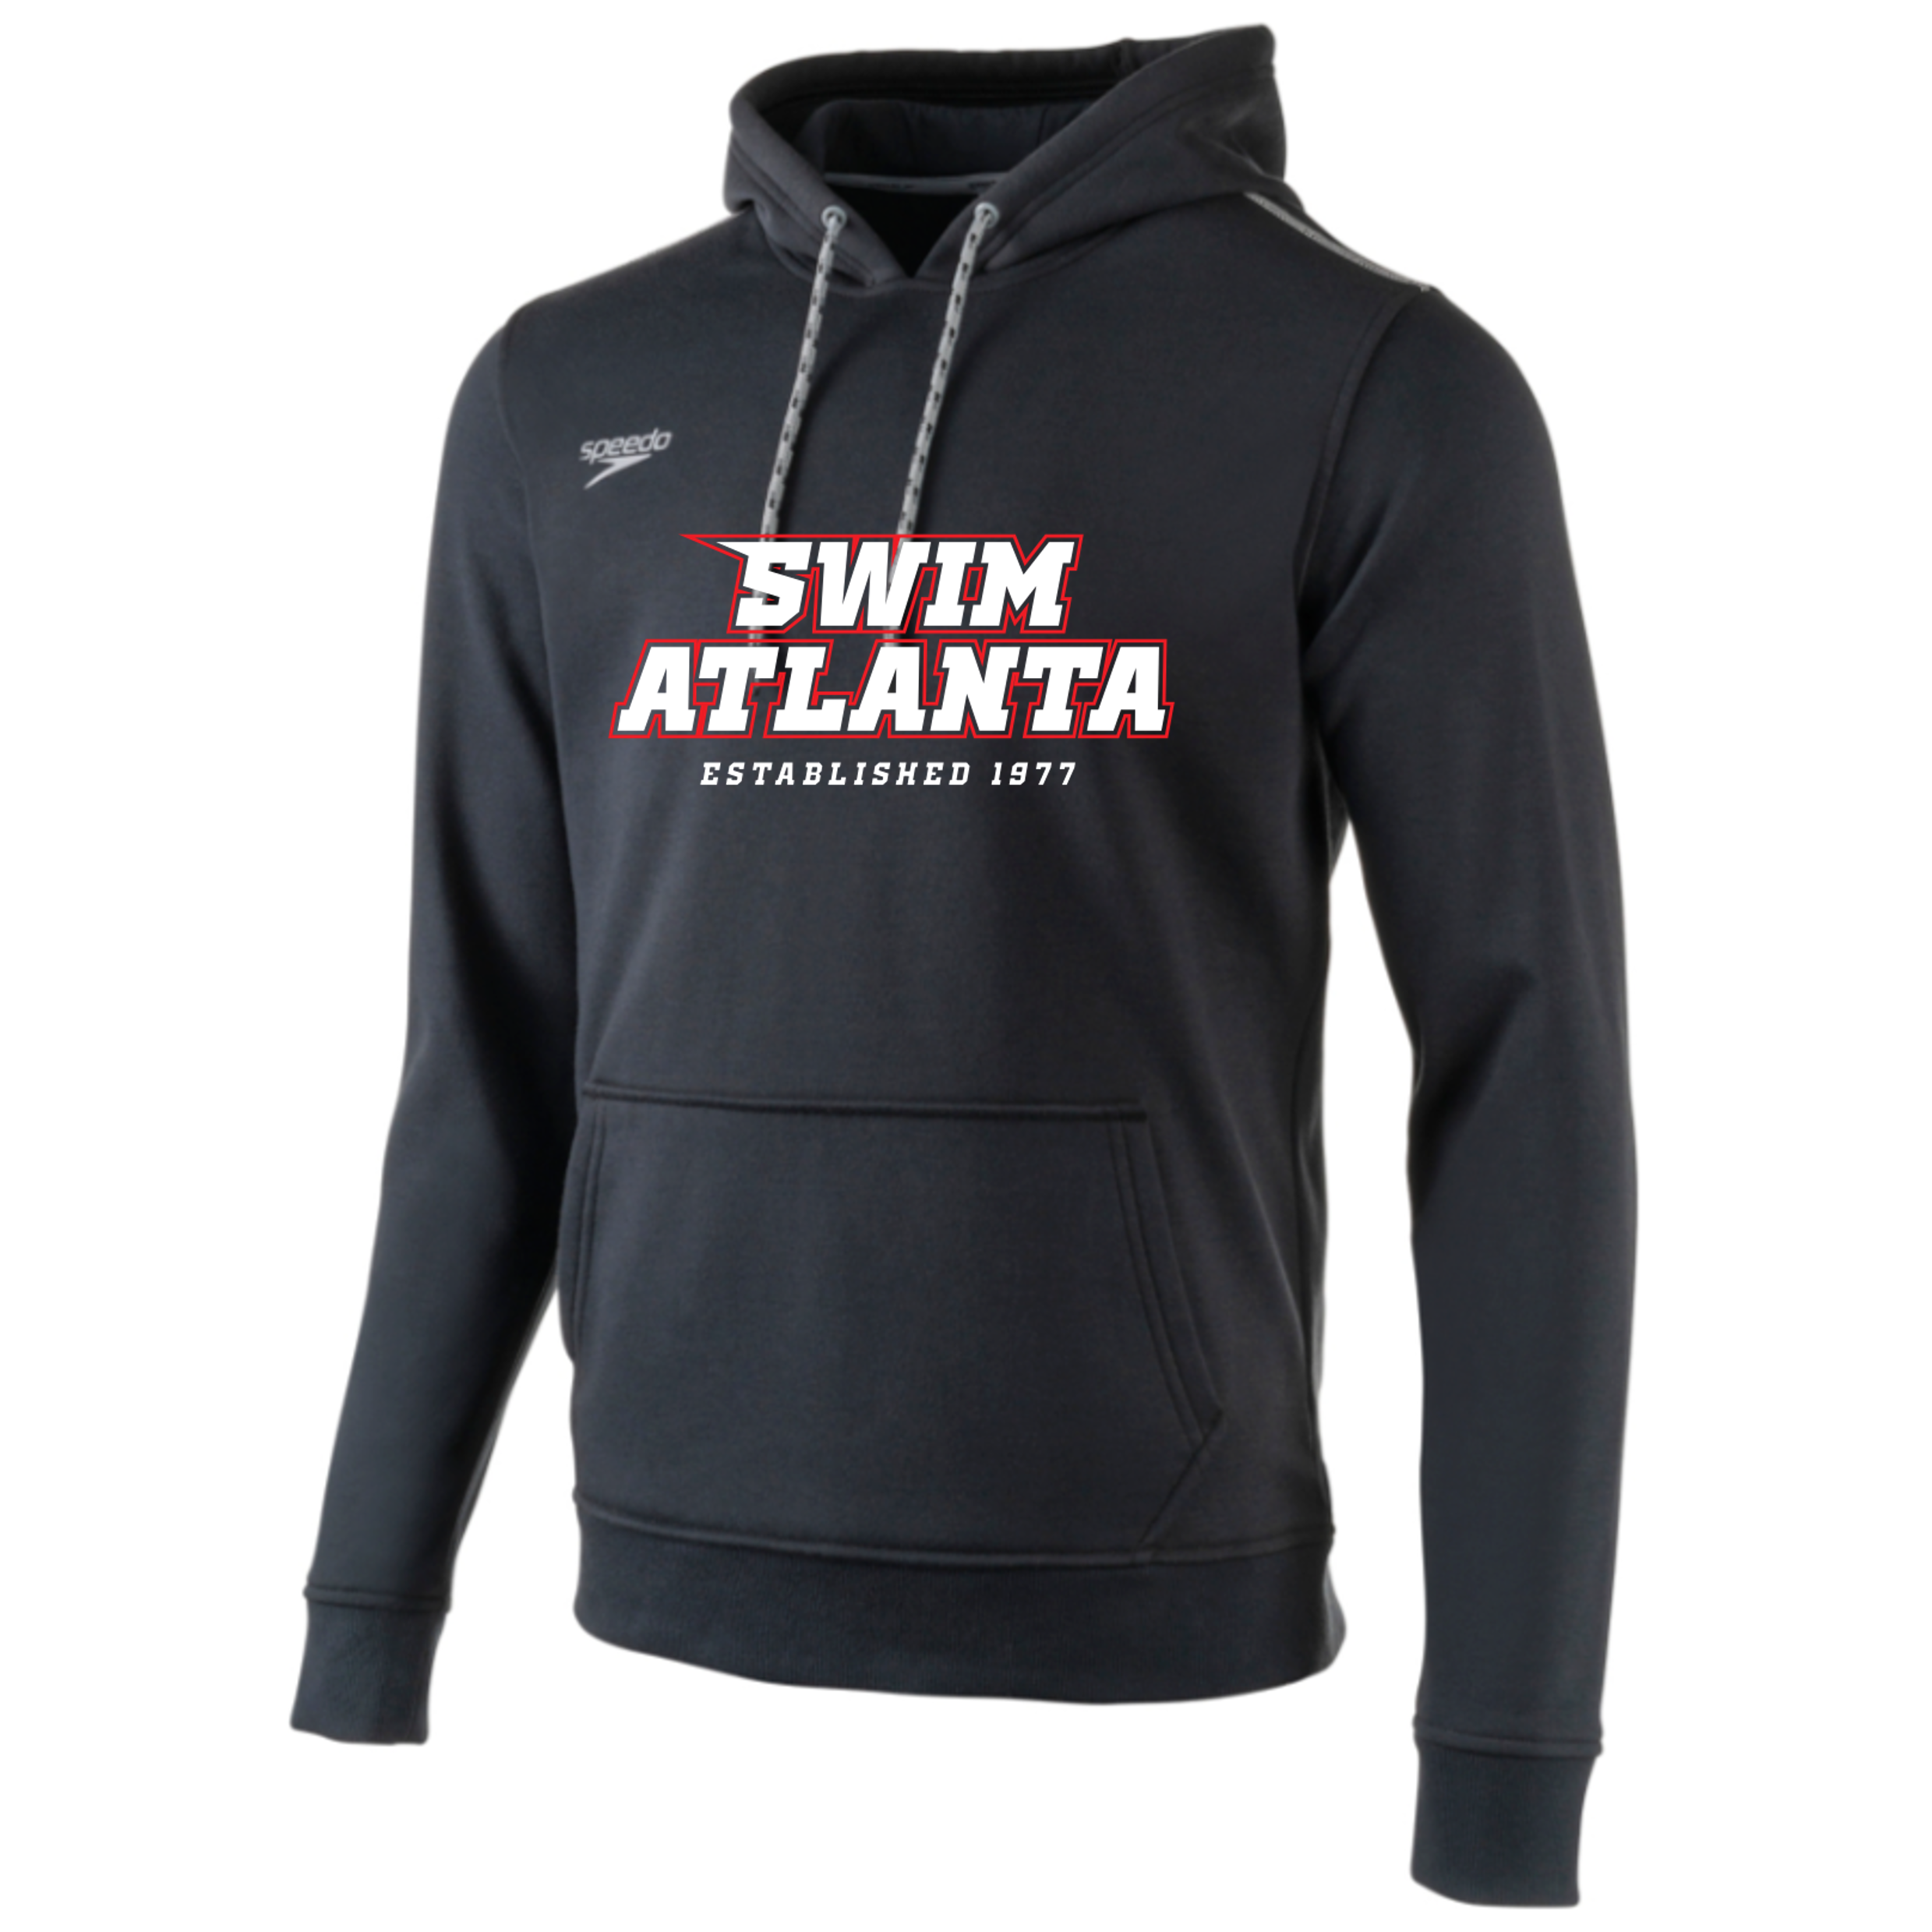 Speedo Unisex Hooded Sweatshirt #4 - Swim Atlanta